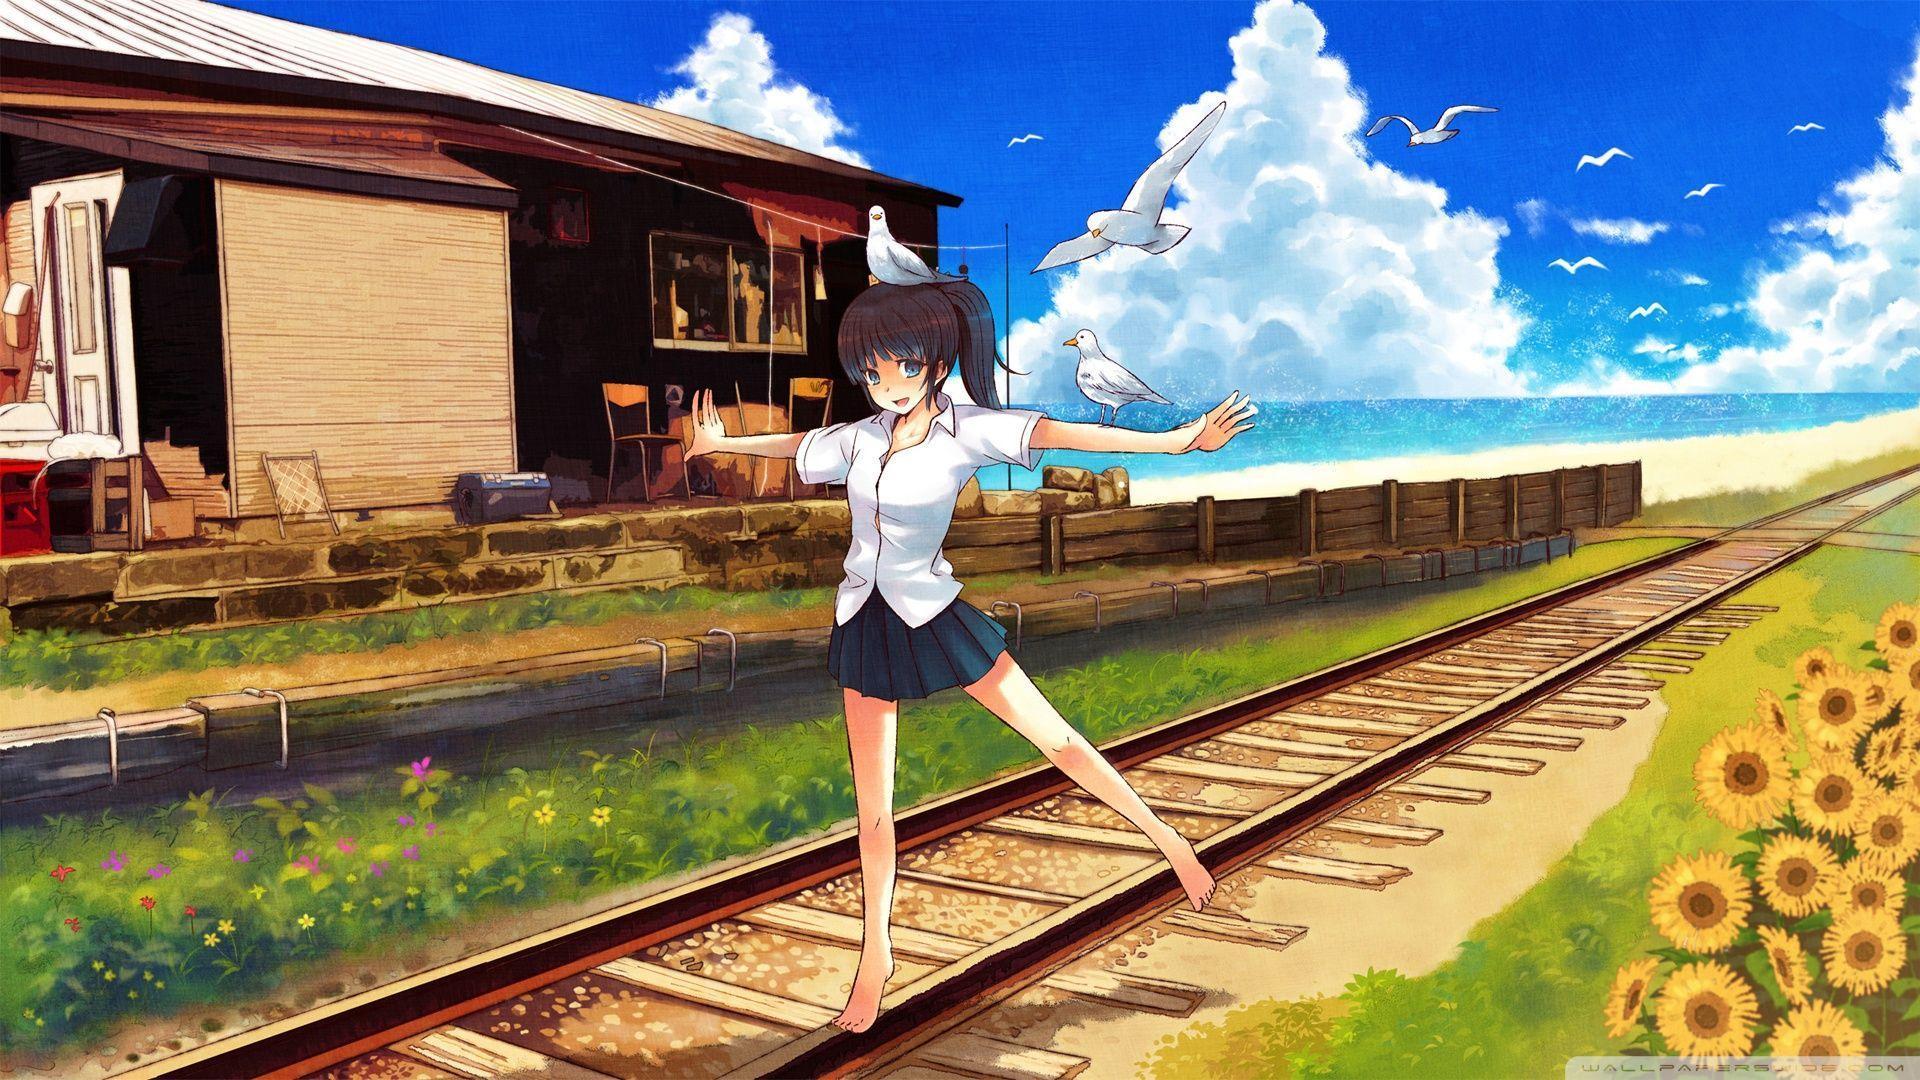 Anime Scenery HD desktop wallpaper, Widescreen, High Definition